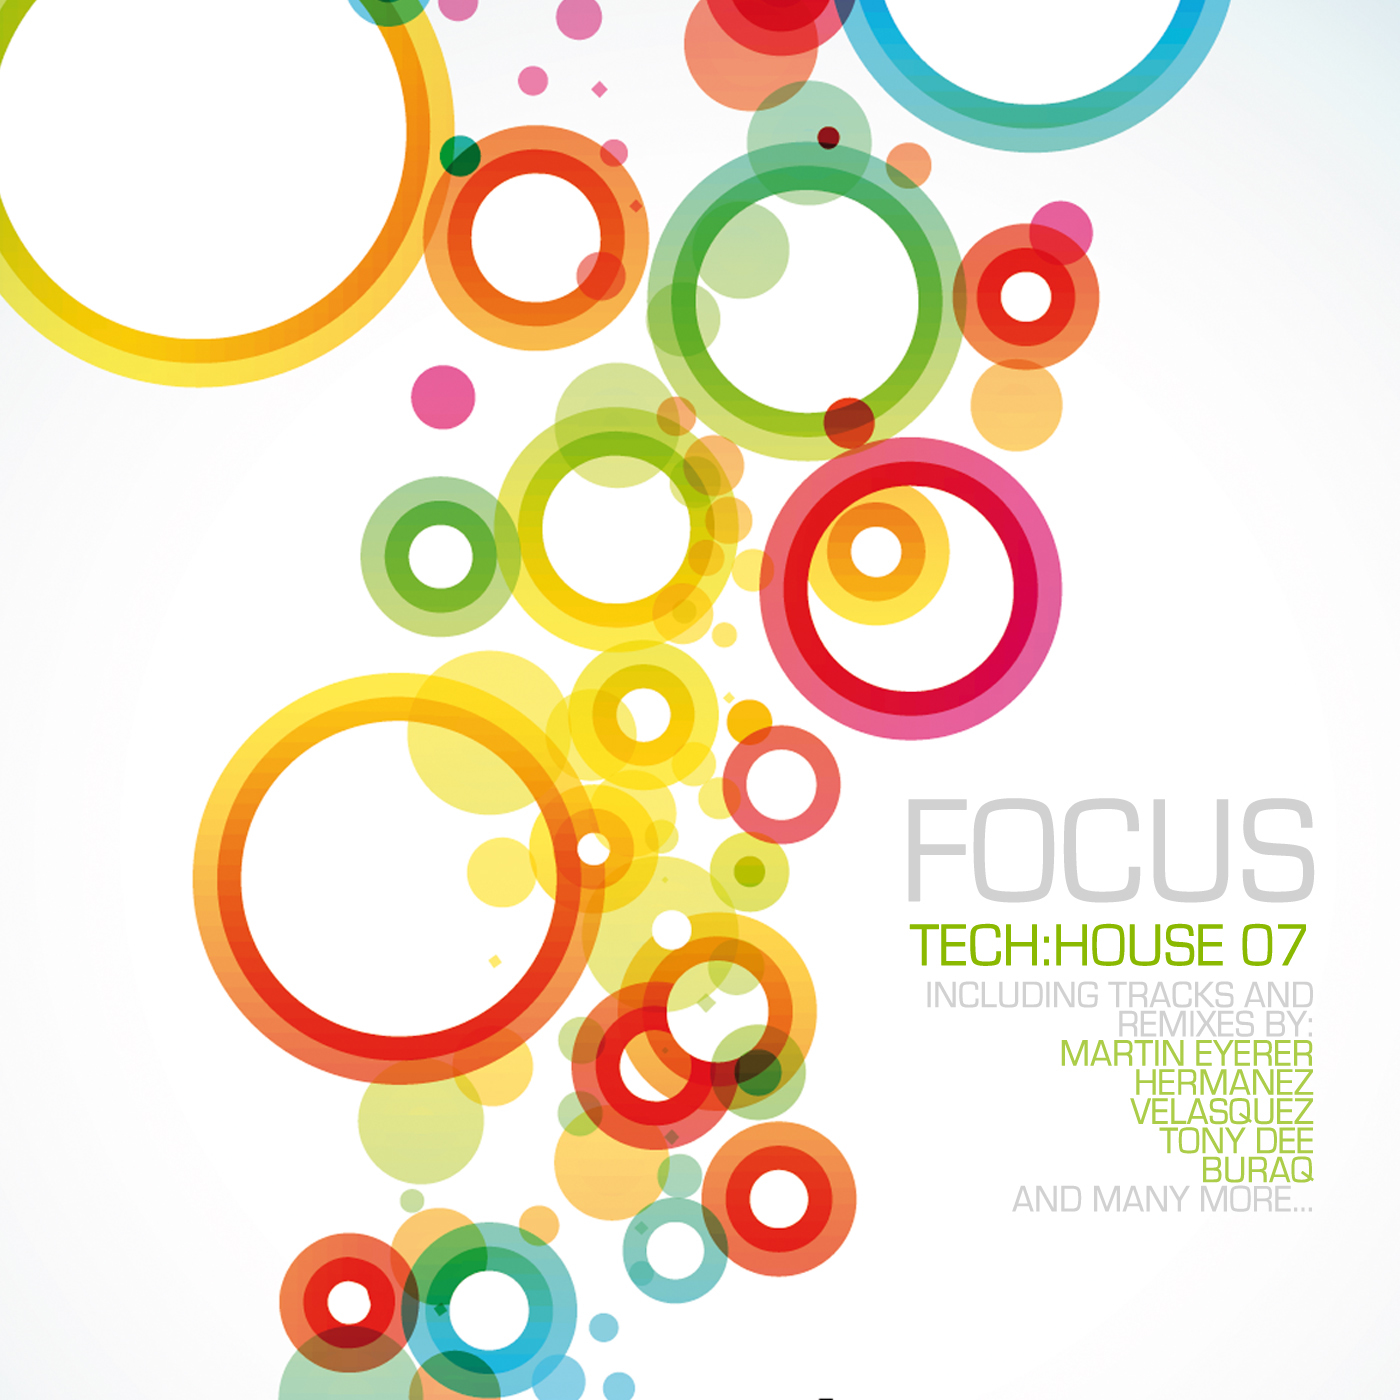 Focus Tech:House 07